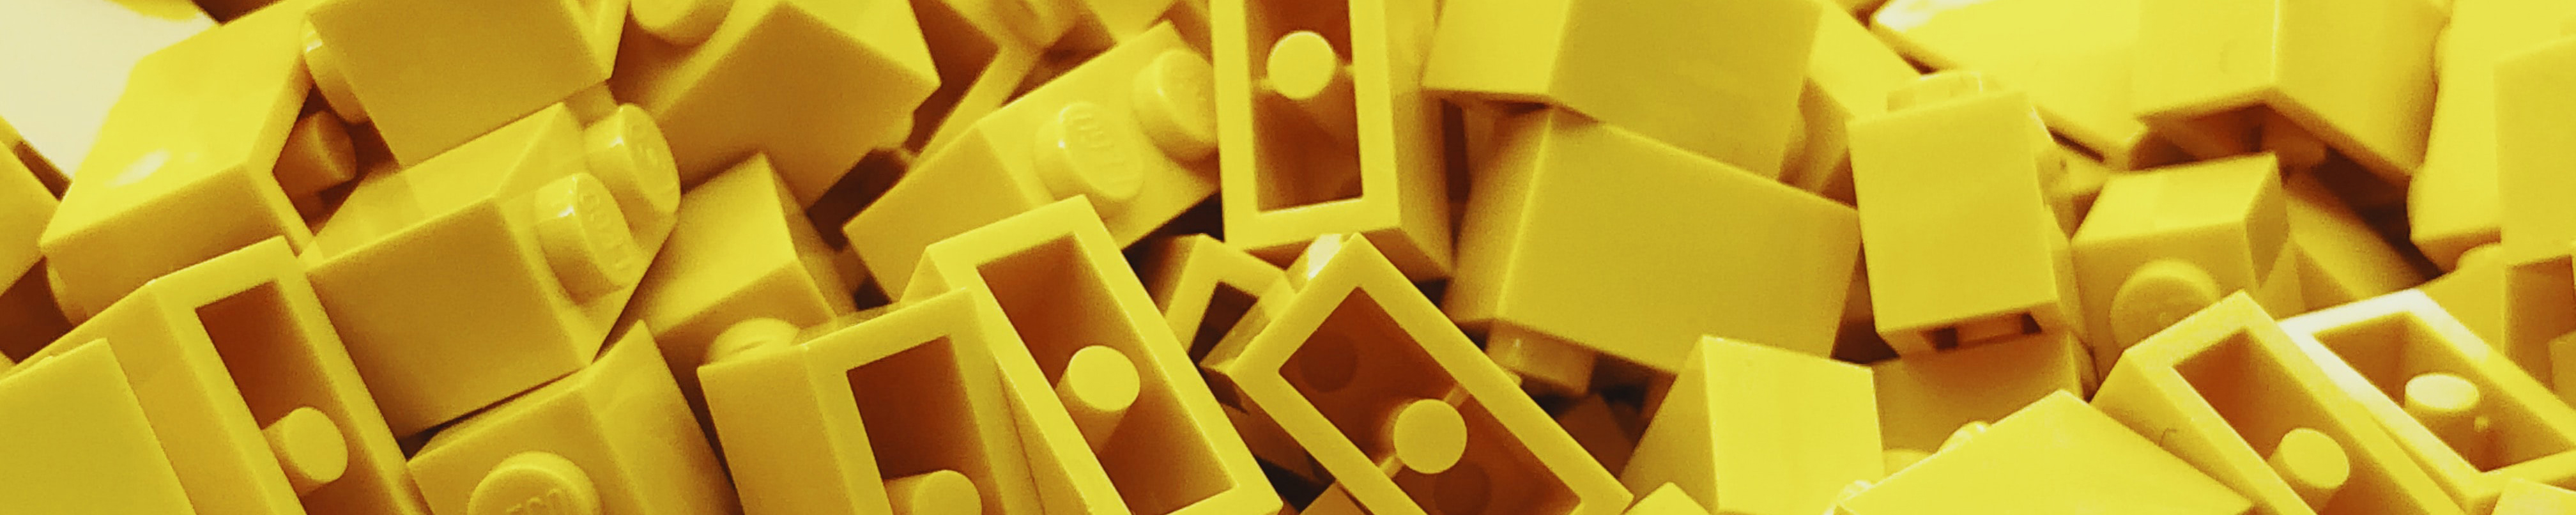 "Yellow lego blocks" by Ryan Quintal, CC0